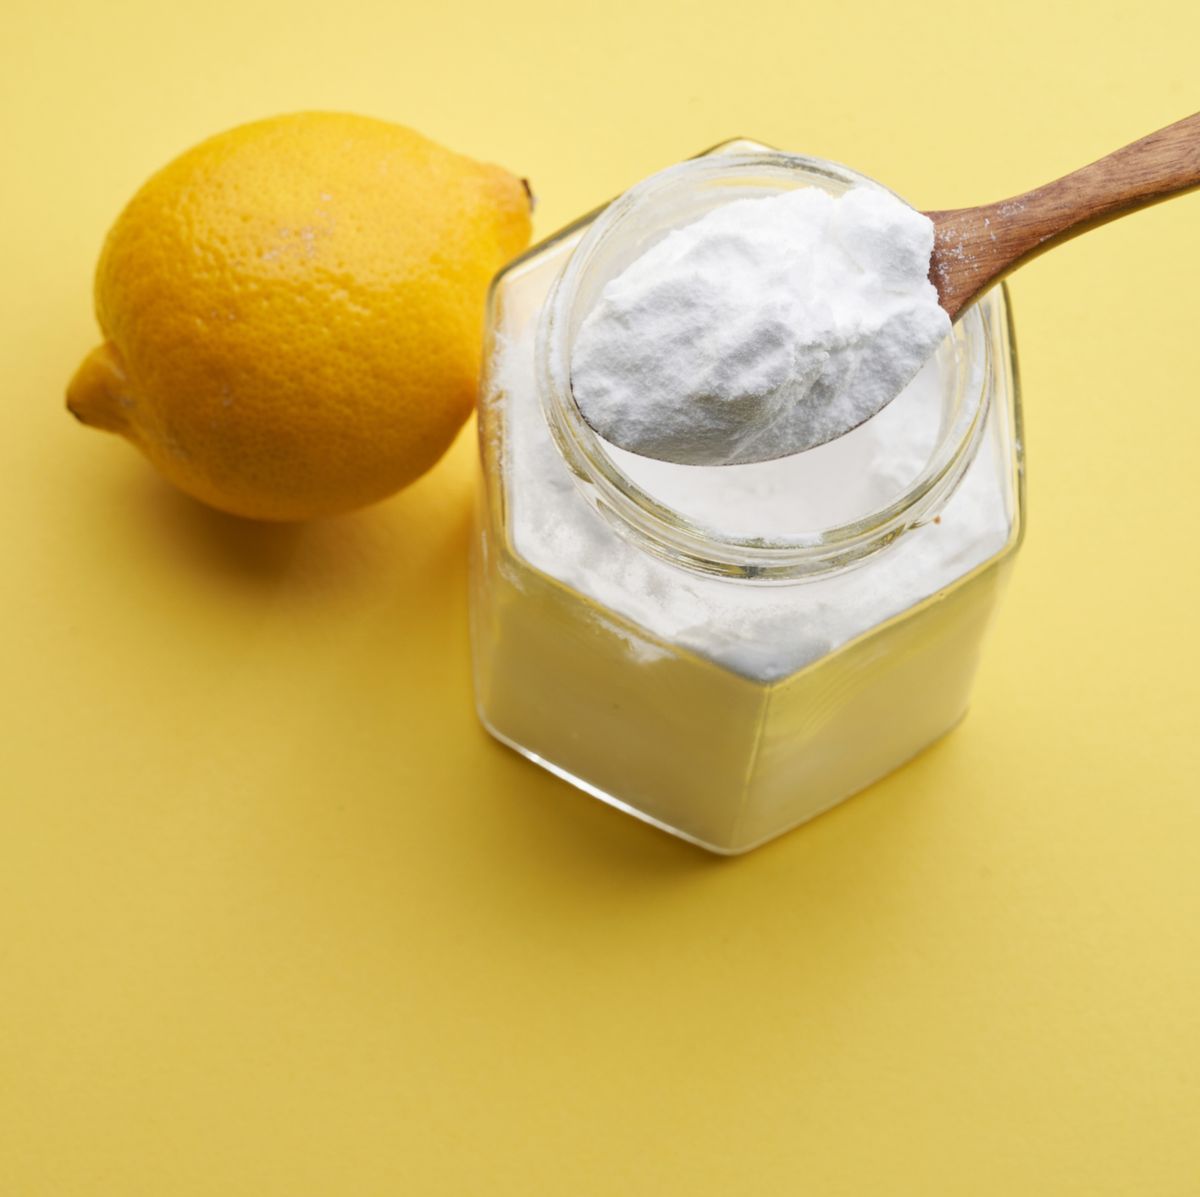 21 ways to clean with bicarbonate of soda - Good Housekeeping